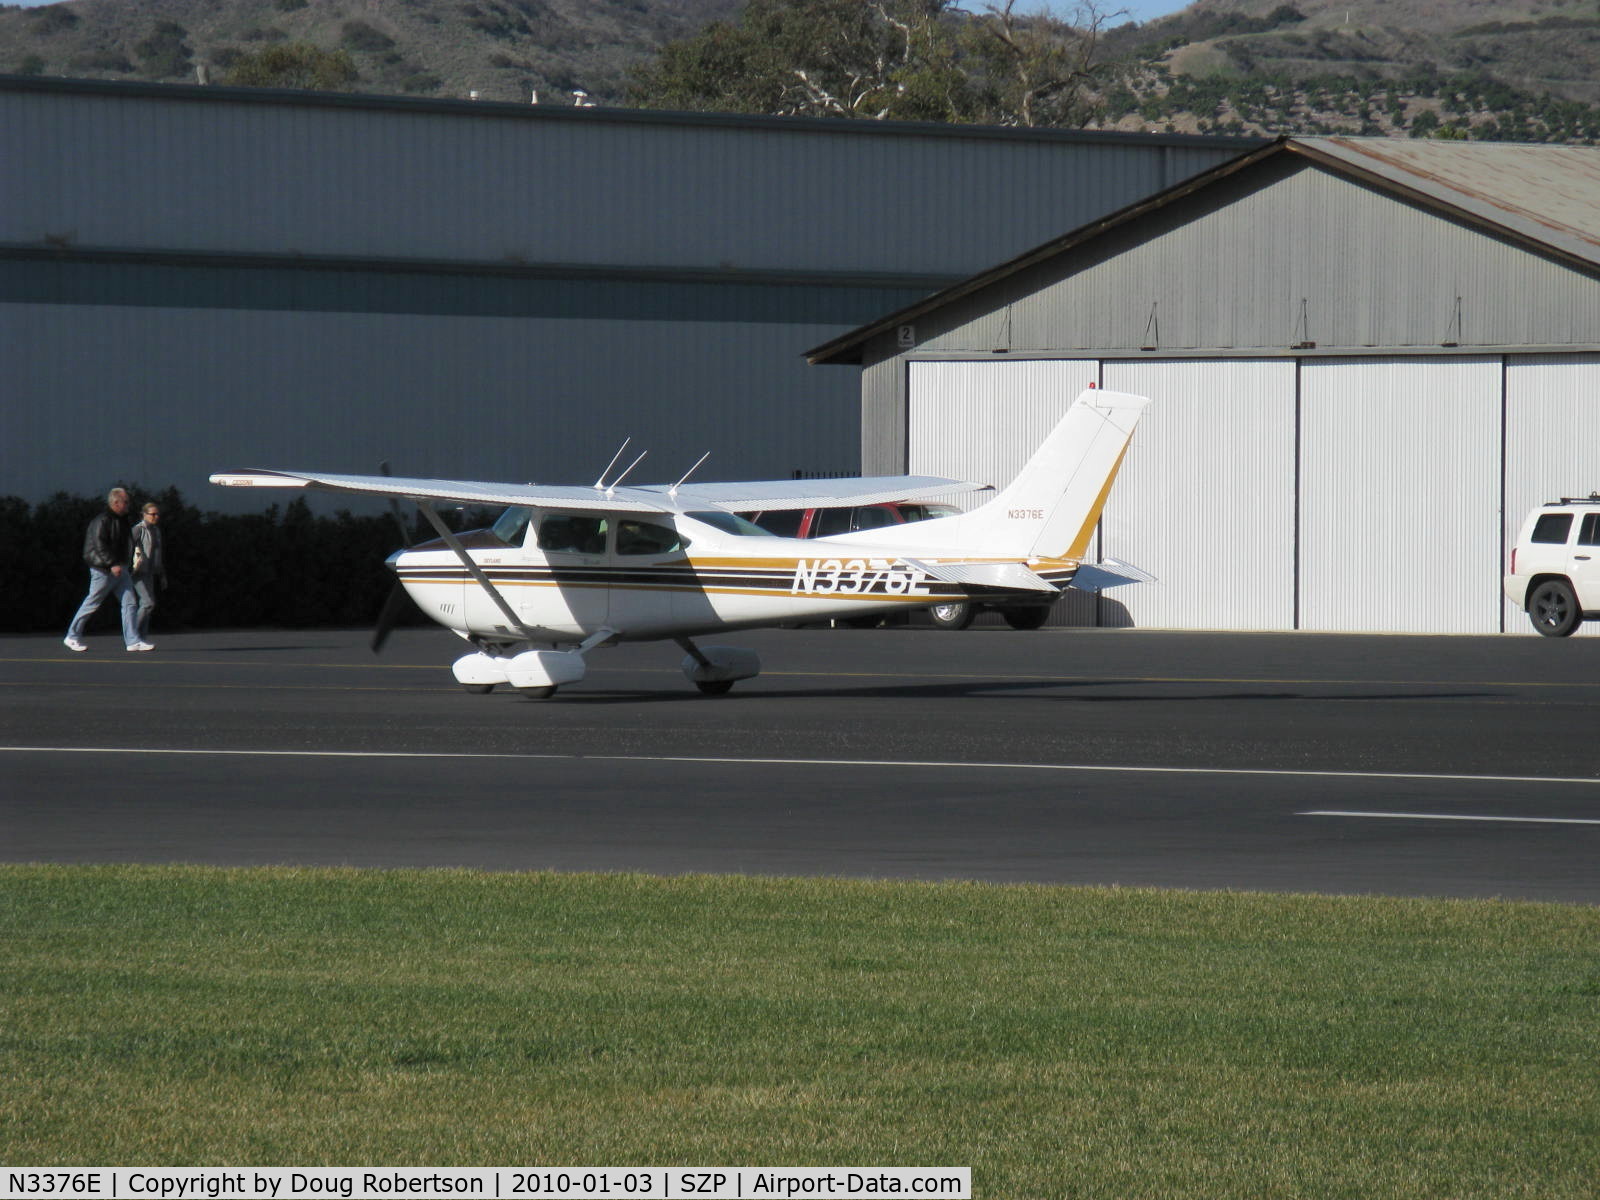 N3376E, 1982 Cessna 182R Skylane C/N 18268243, 1982 Cessna 182R SKYLANE, Continental O-470-U 230 Hp, holding short Rwy 04